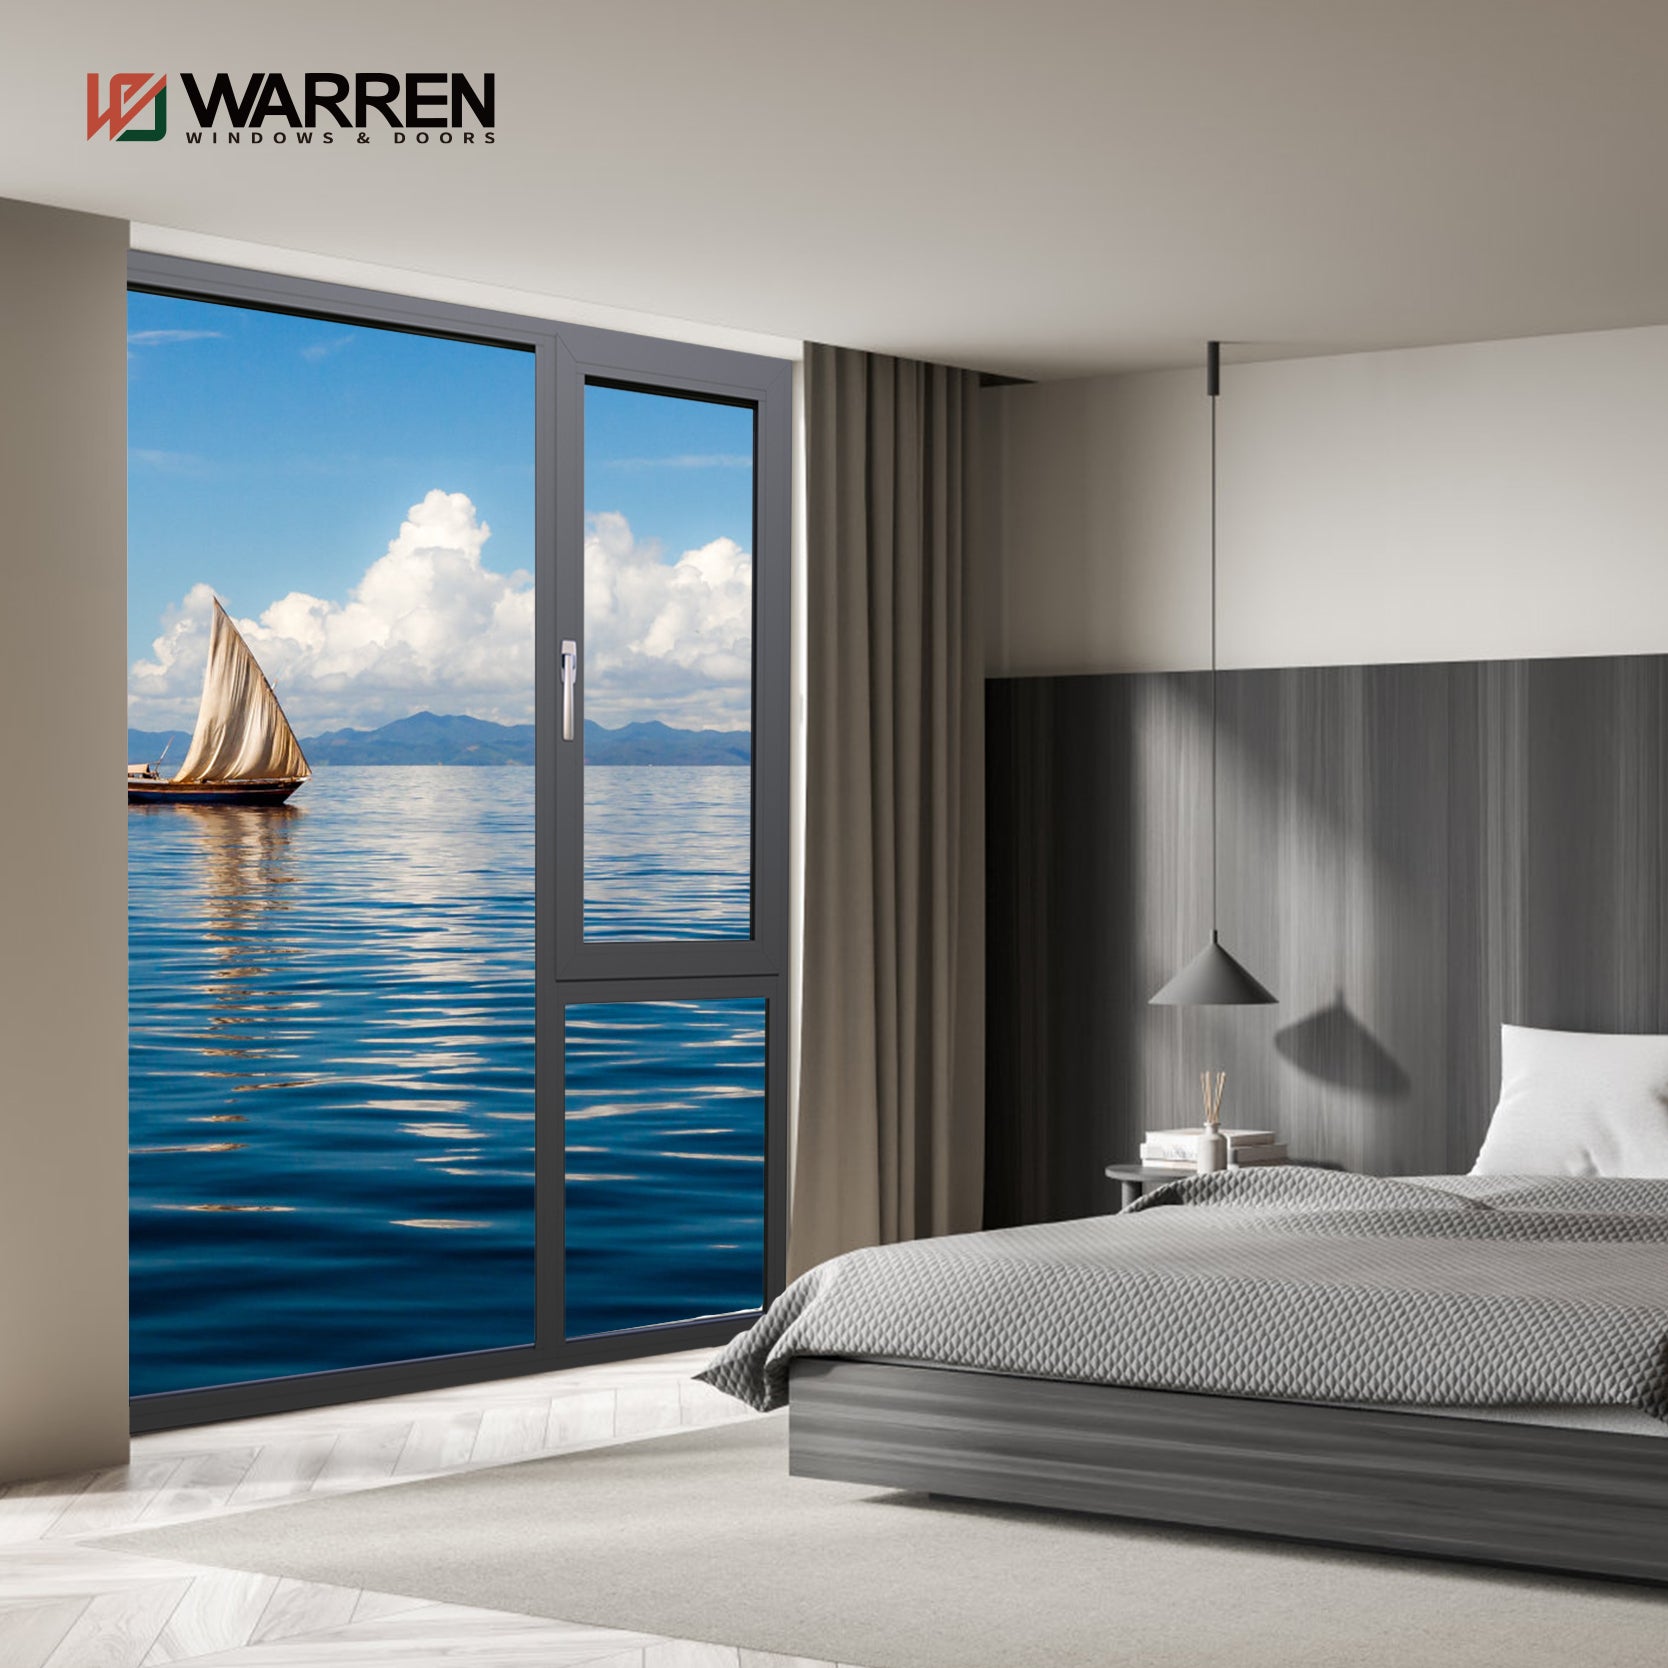 Warren Factory Price Manufacturer Supplier Aluminum Outward Opening Casement Window Villa Door And Window System